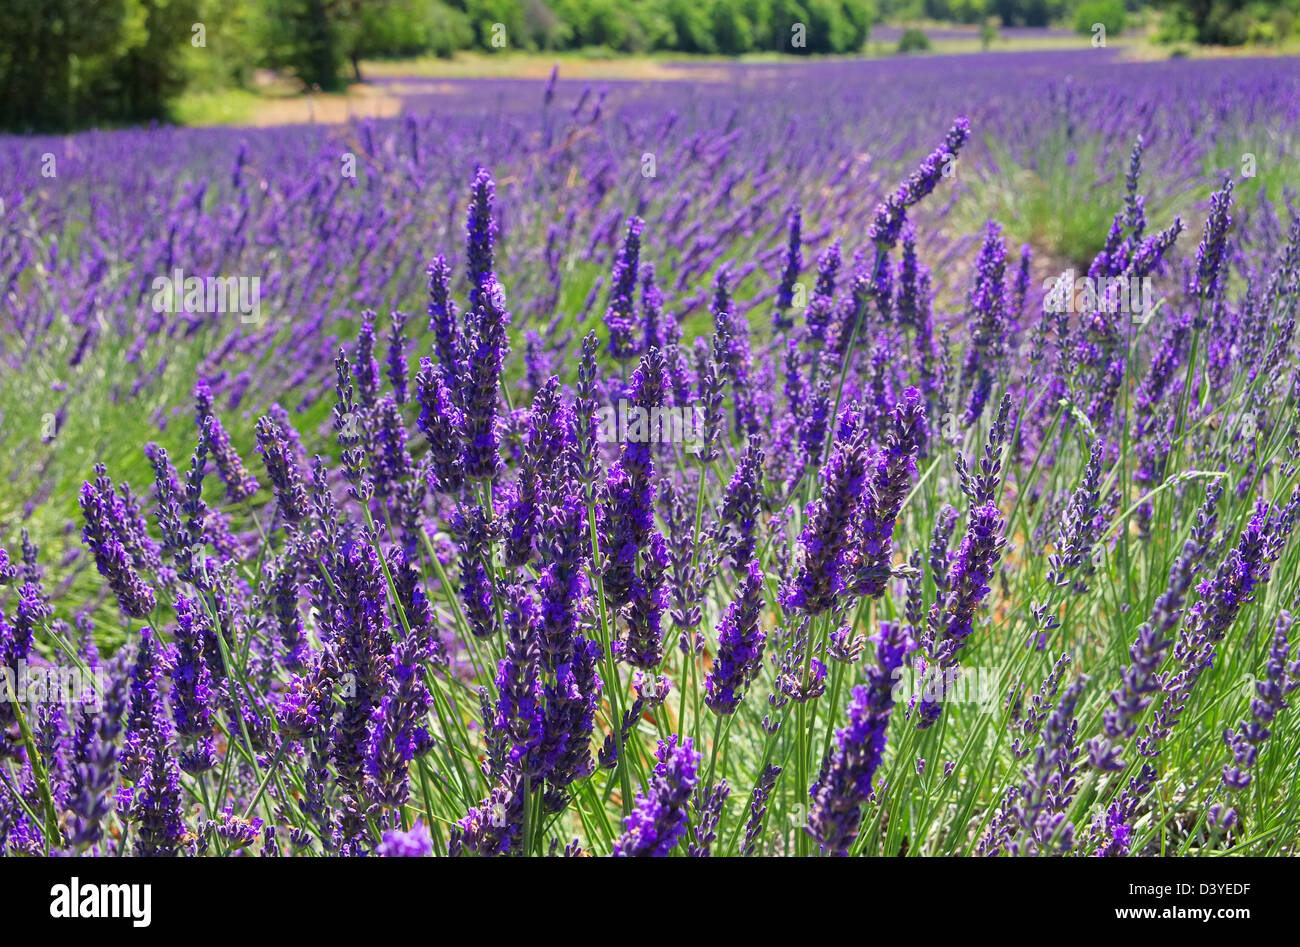 Lavendelfeld - lavender field 105 Stock Photo